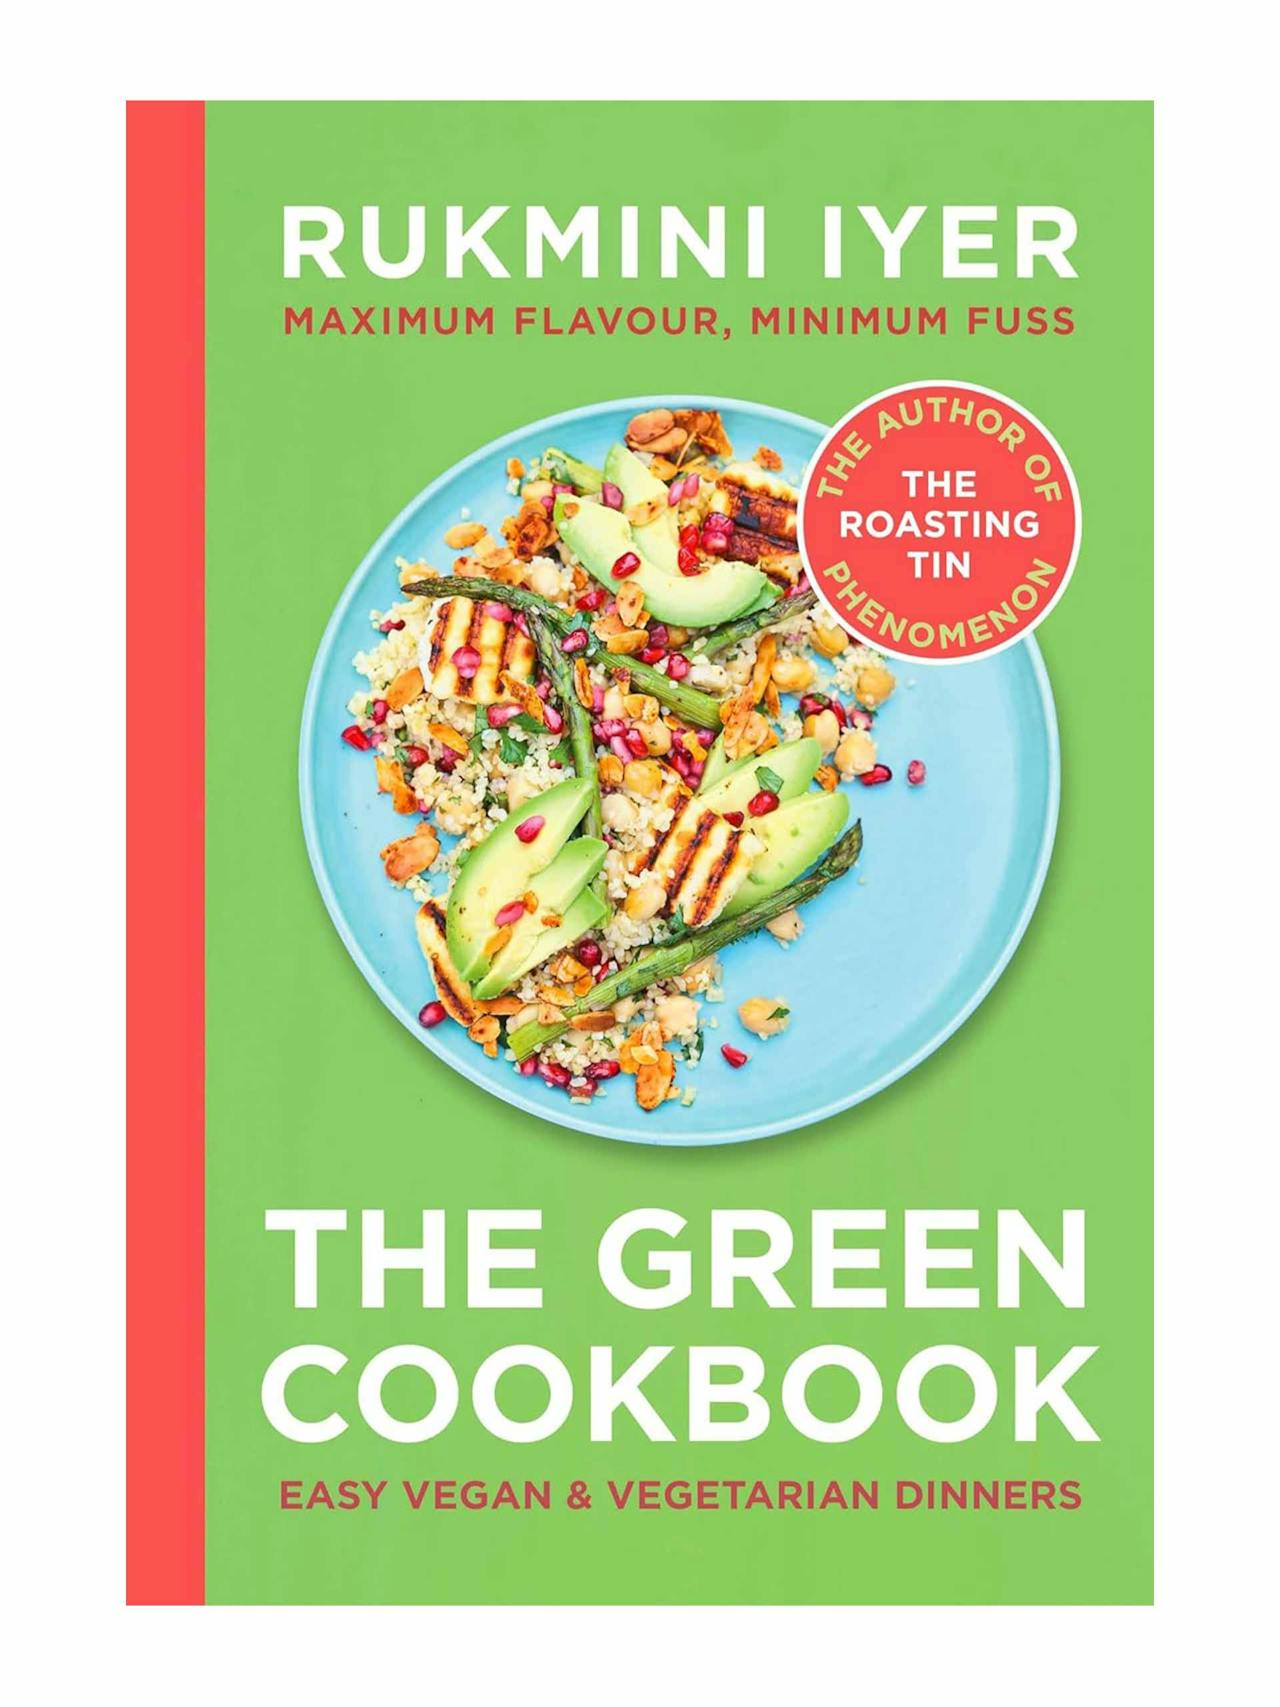 The Green cookbook